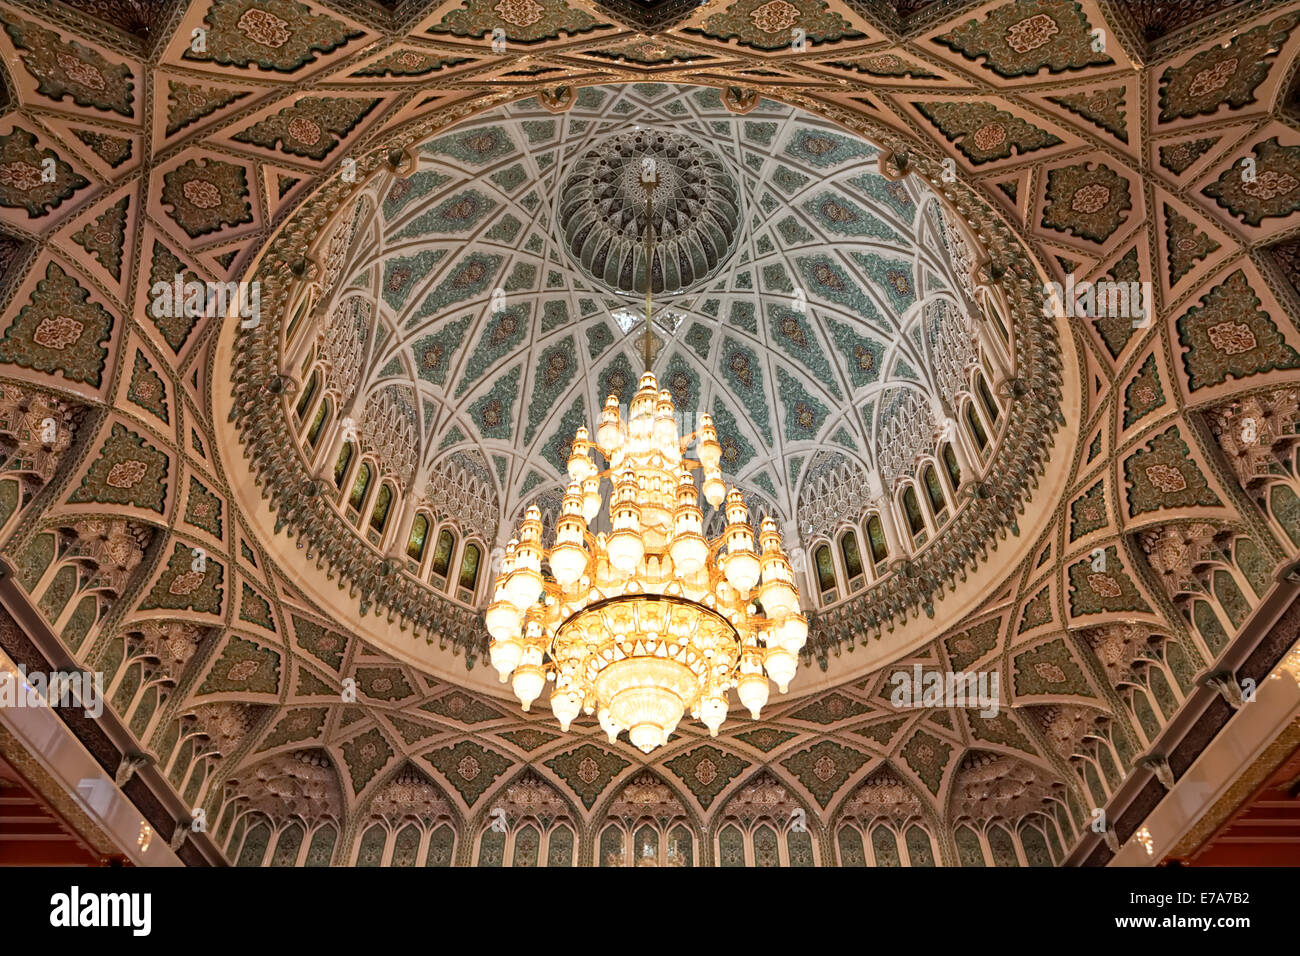 Großer Kronleuchter in der Kuppel, Sultan Qaboos Moschee, Muscat, Oman  Stockfotografie - Alamy